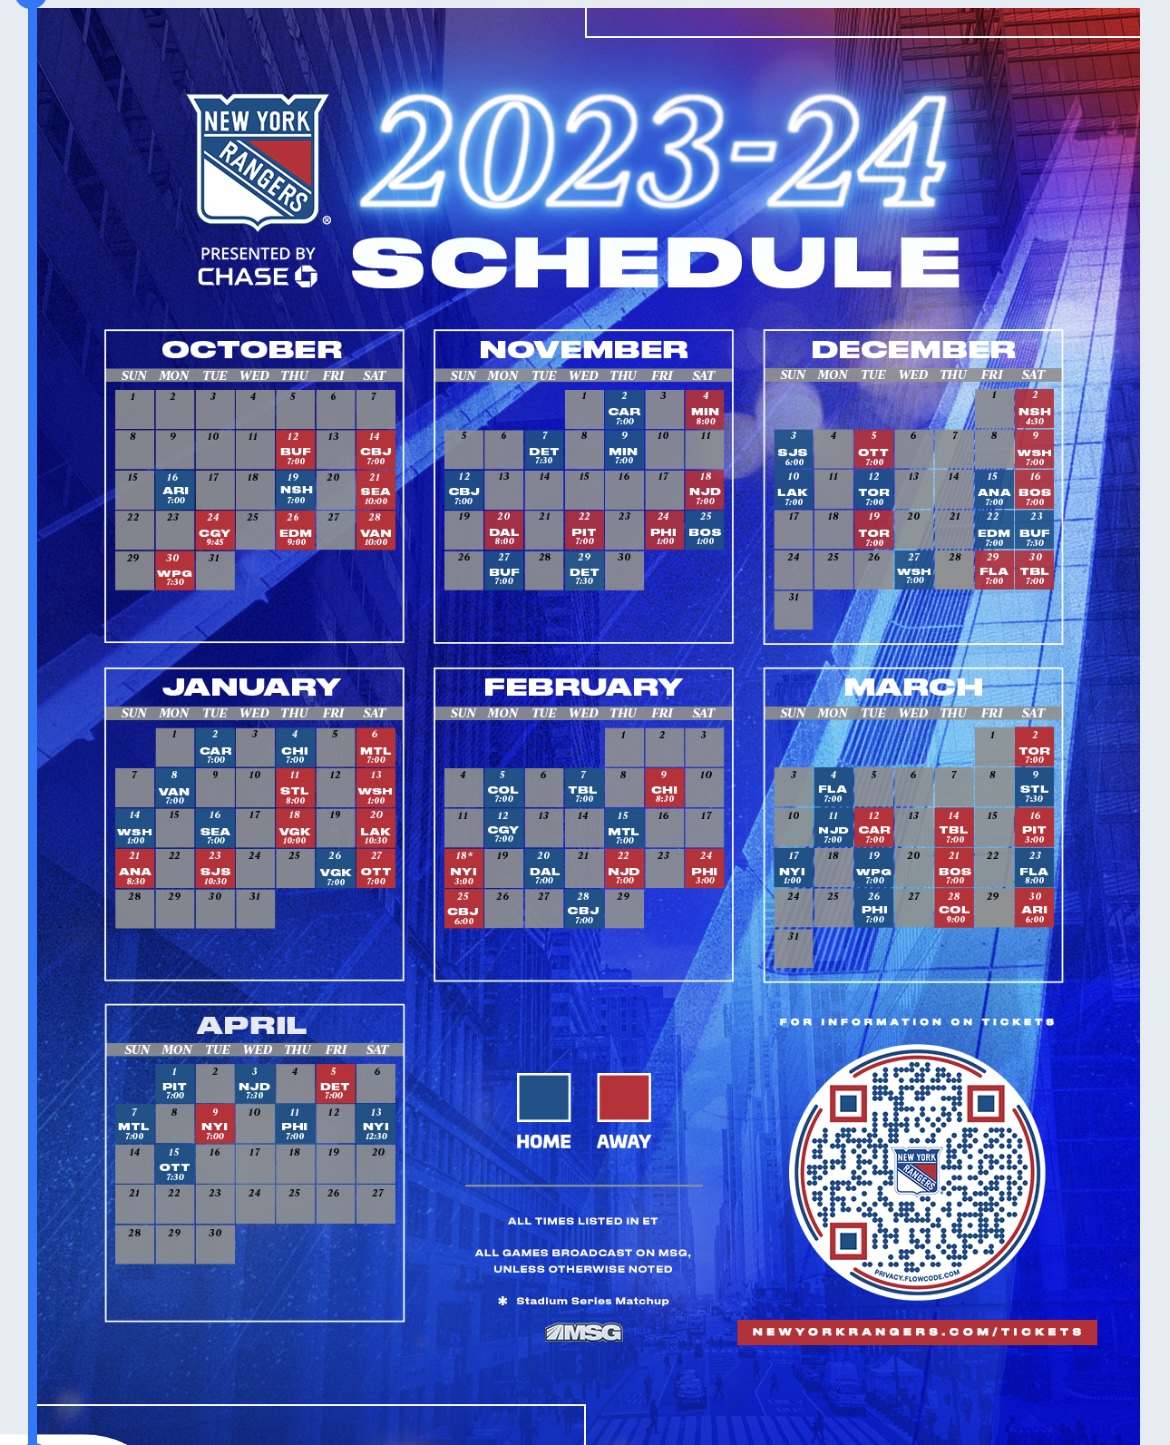 New York Rangers 202324 schedule announced